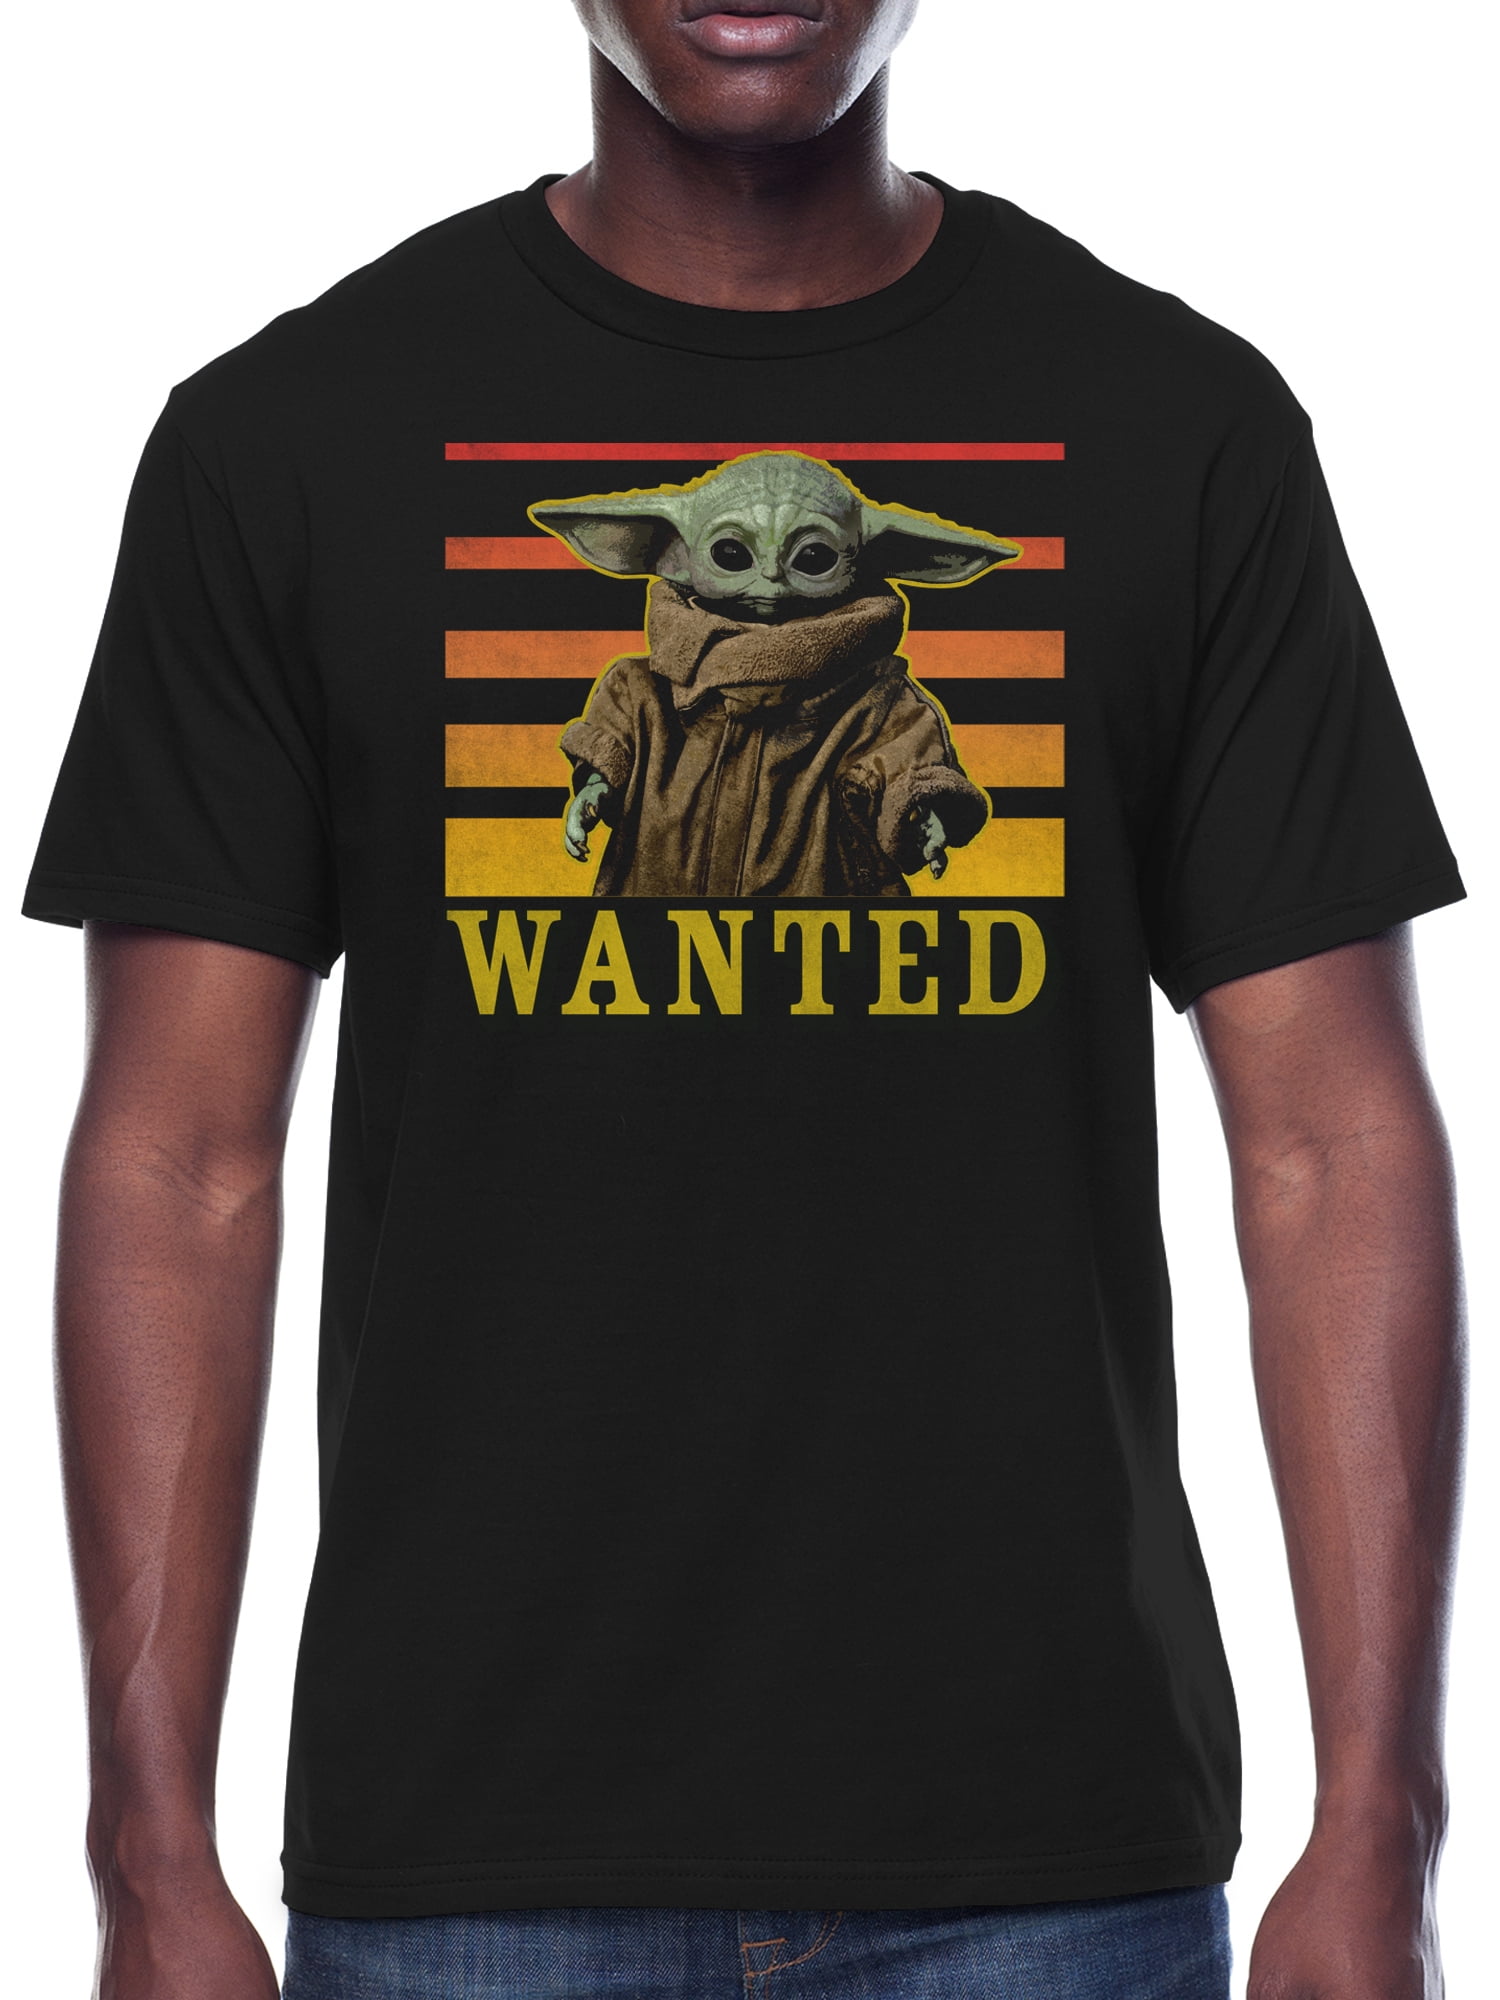 Love Star Wars Gift t022 Star Wars The Mandalorian Shirt This Is The Way Shirt The Mandalorian Baby Yoda Shirt Star Wars Baby Yoda Shirt